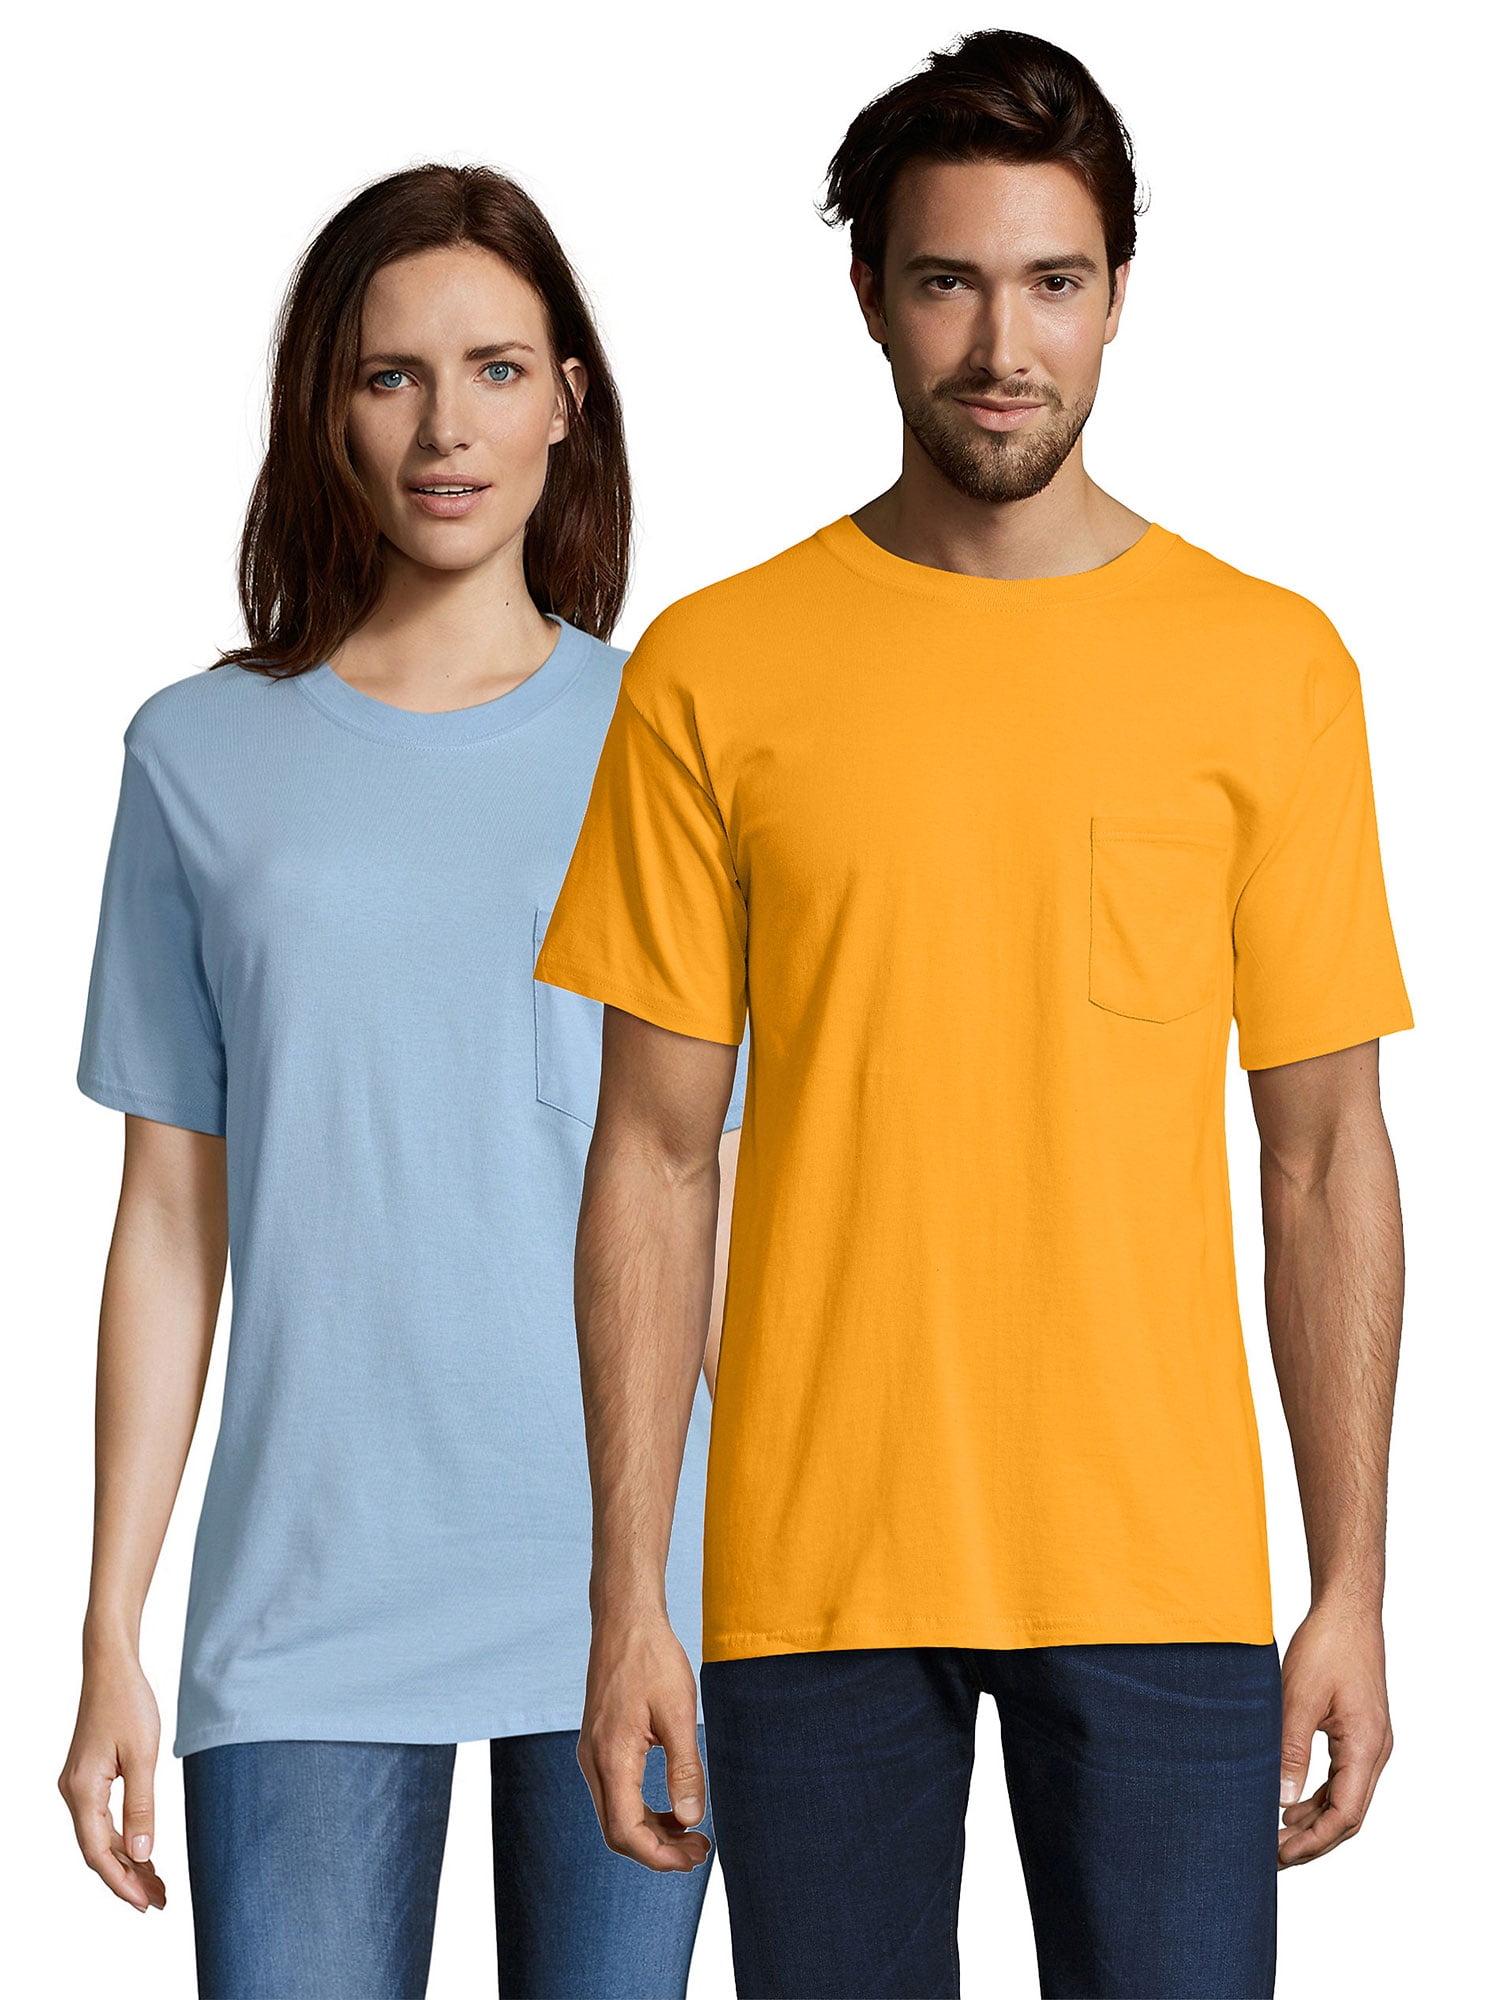 Hanes Beefy-T Adult Pocket T-Shirt 